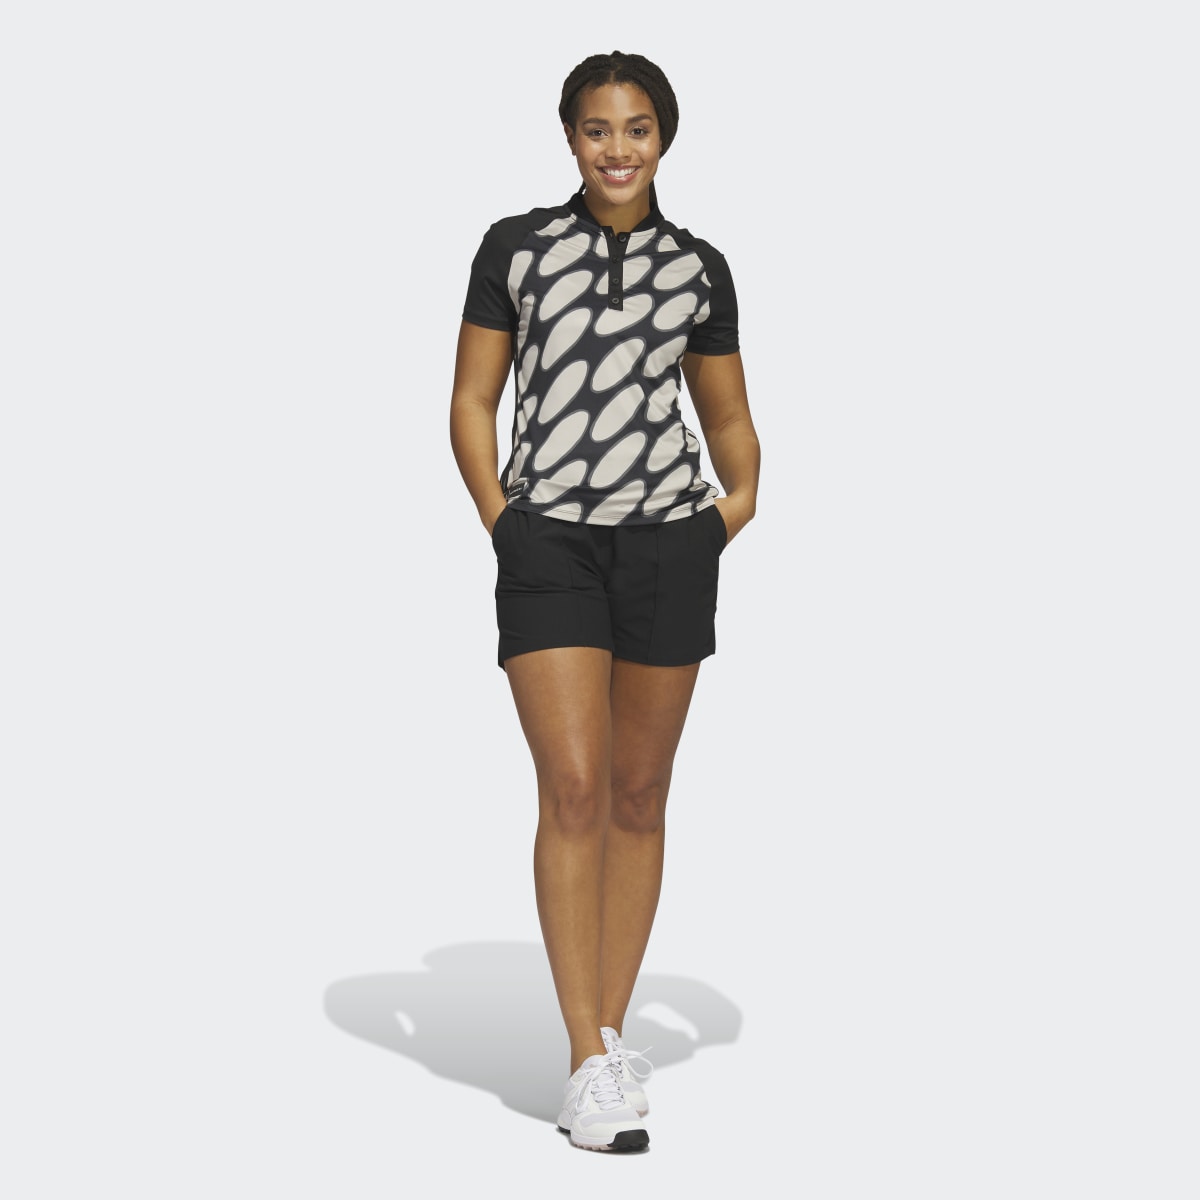 Adidas Marimekko Golf Polo Shirt. 6